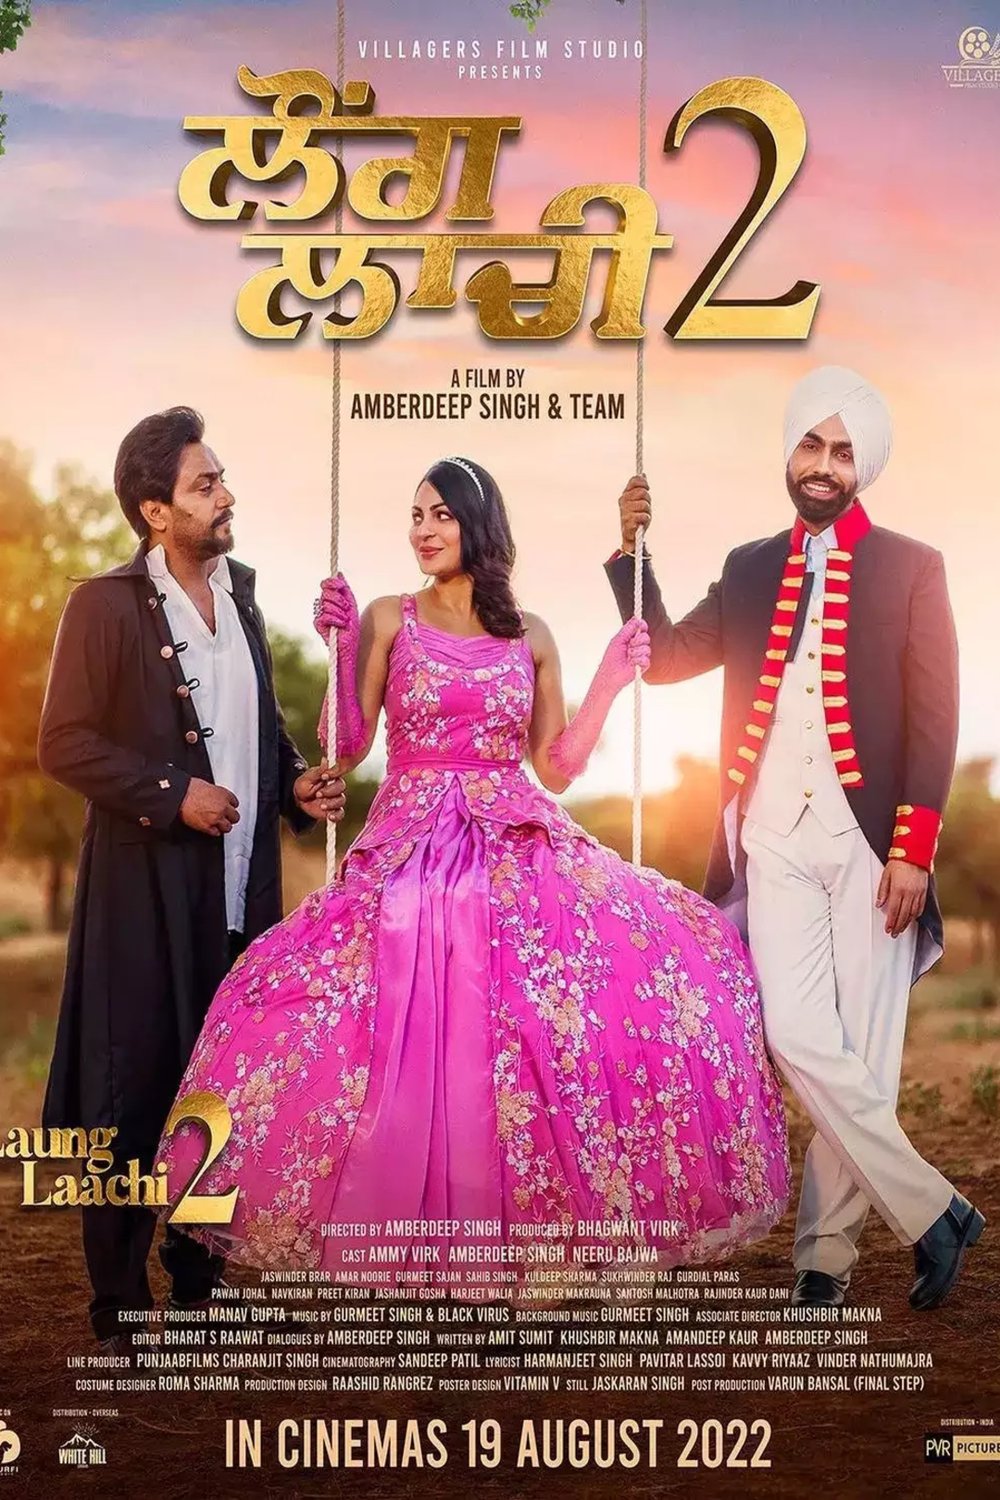 Punjabi poster of the movie Laung Laachi 2